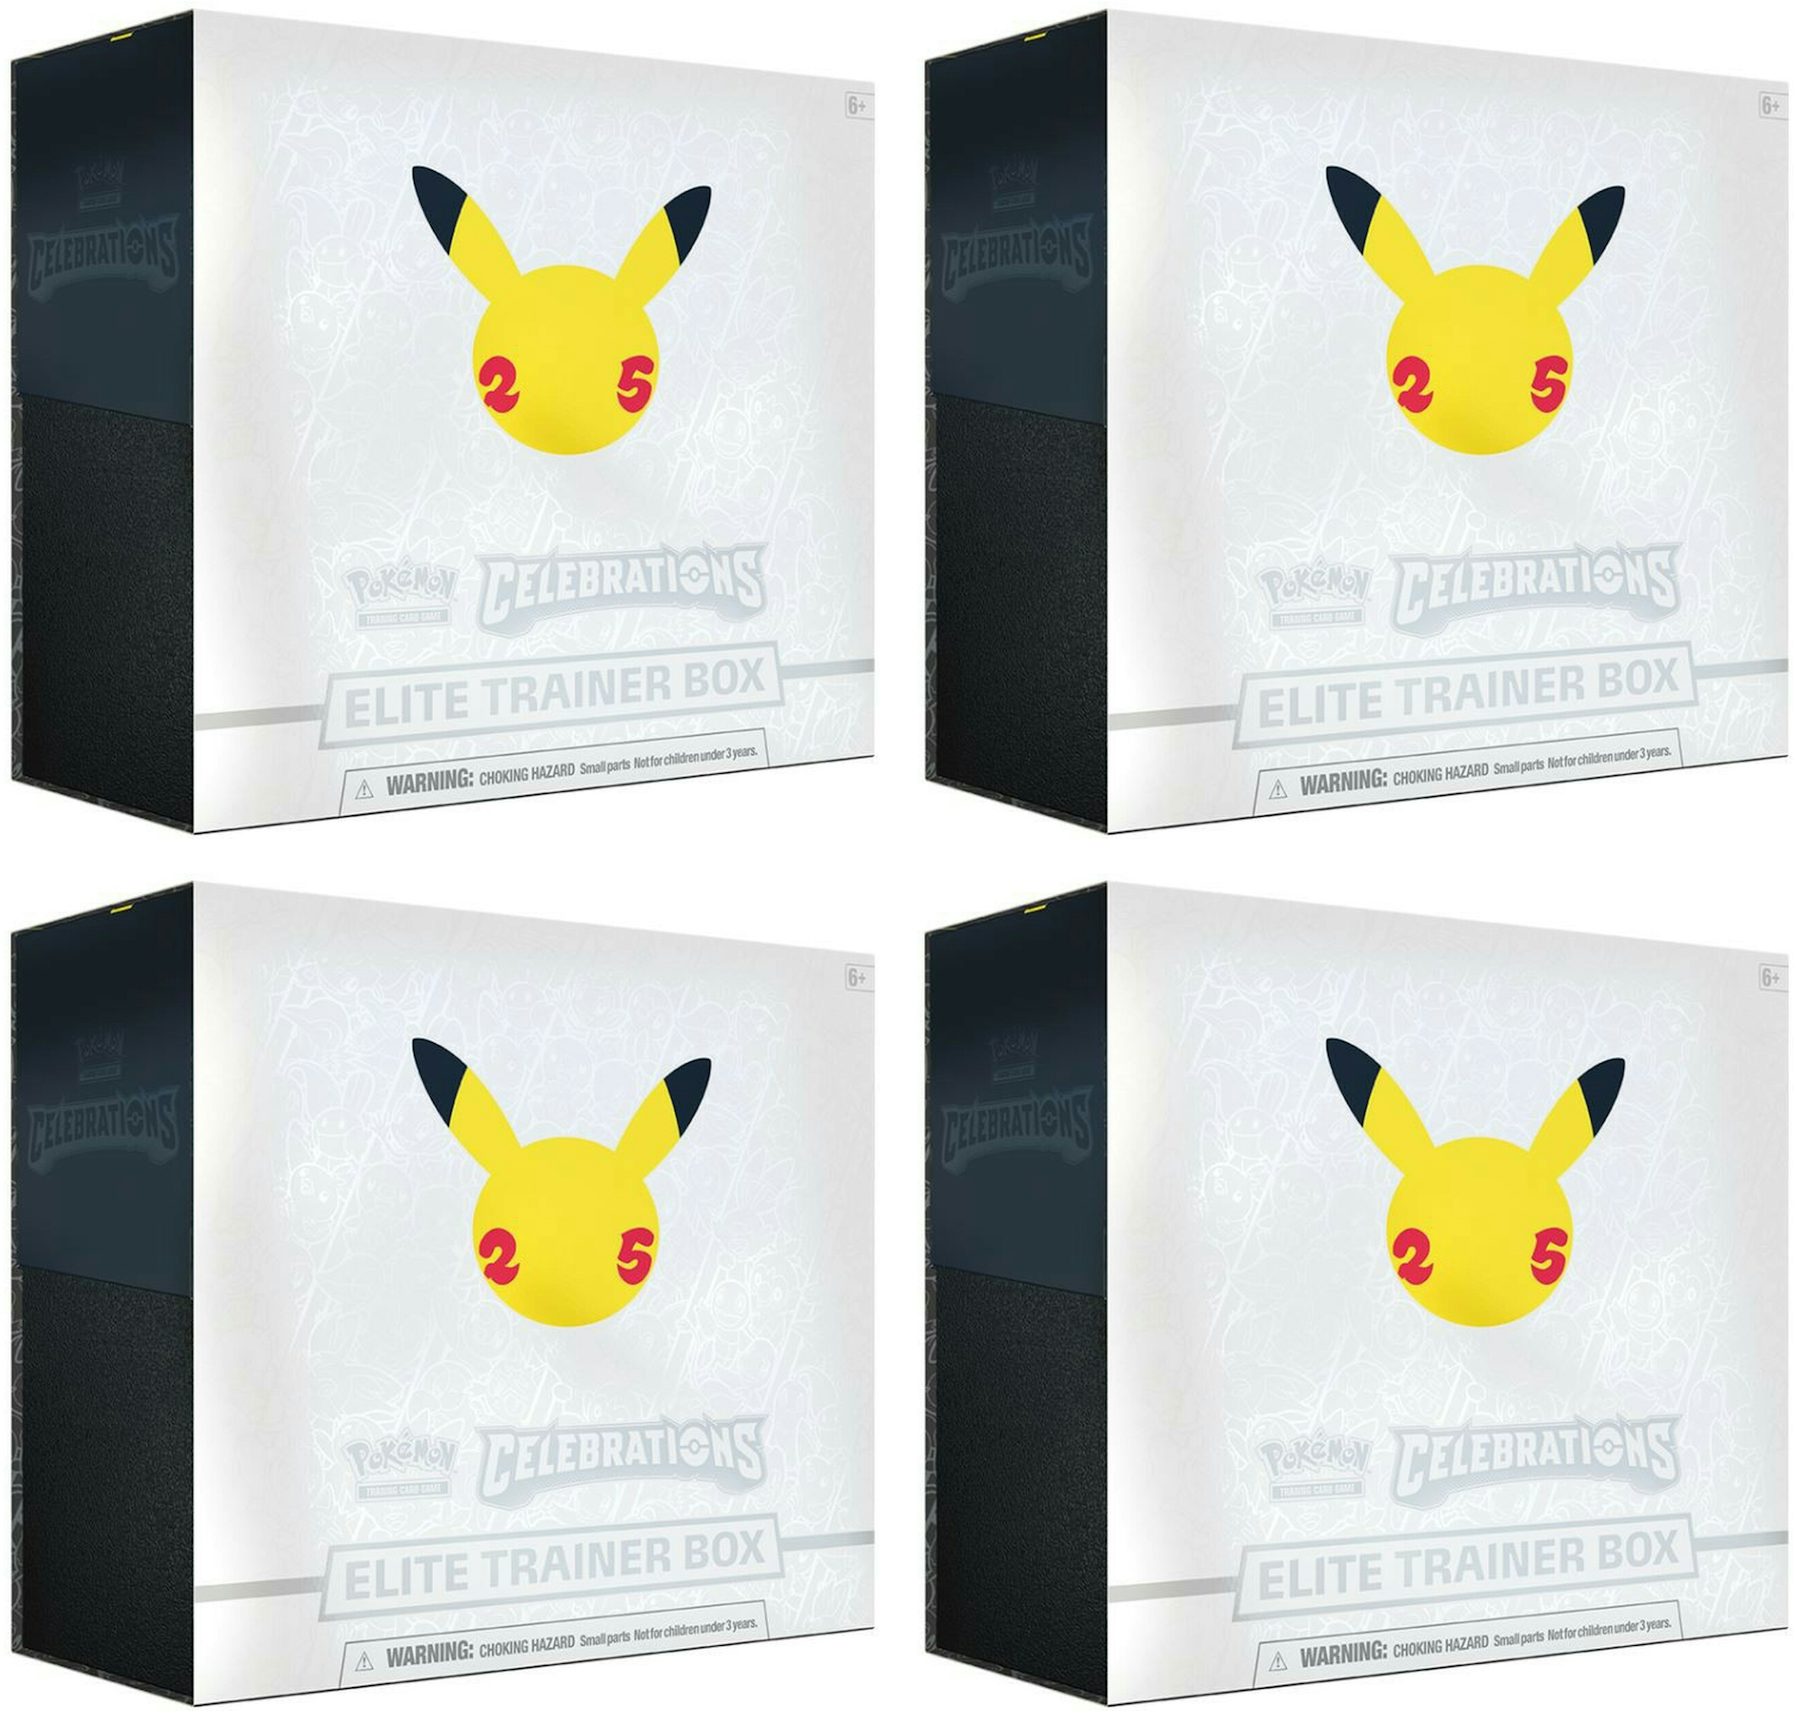 Pokémon TCG: Celebrations Pokémon Center Elite Trainer Box